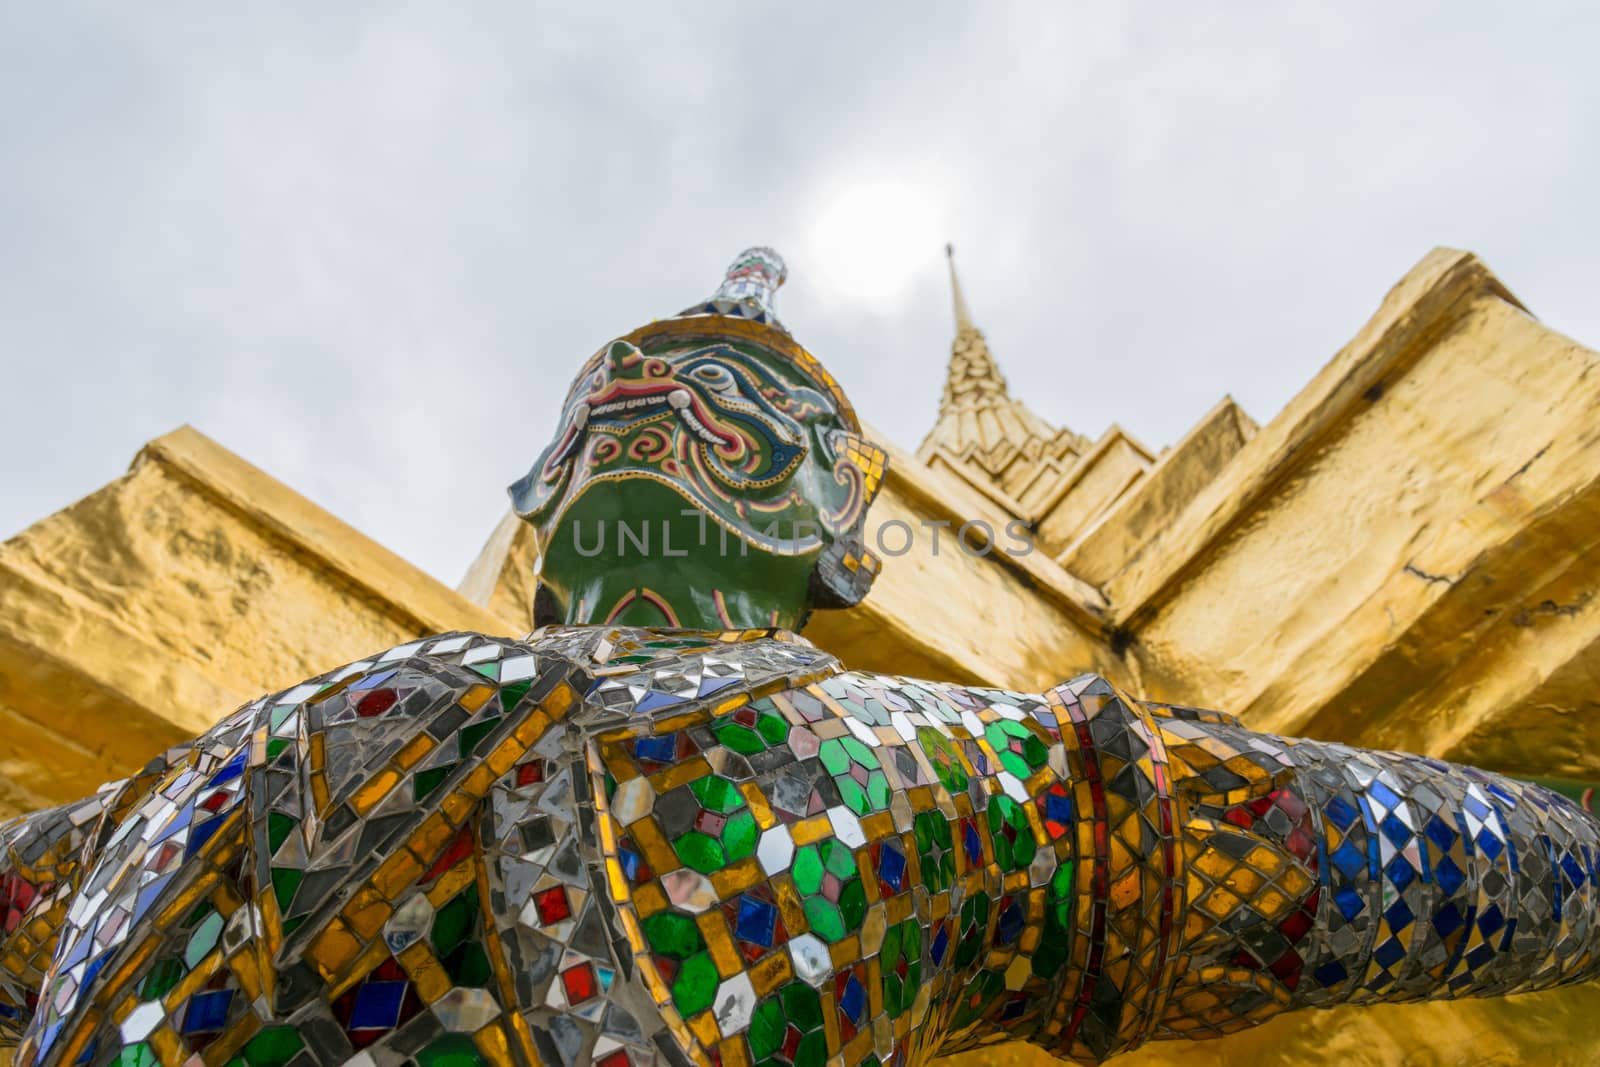 Wat Phra Kaew, temple of Emerald Buddha in Bangkok, Thailand